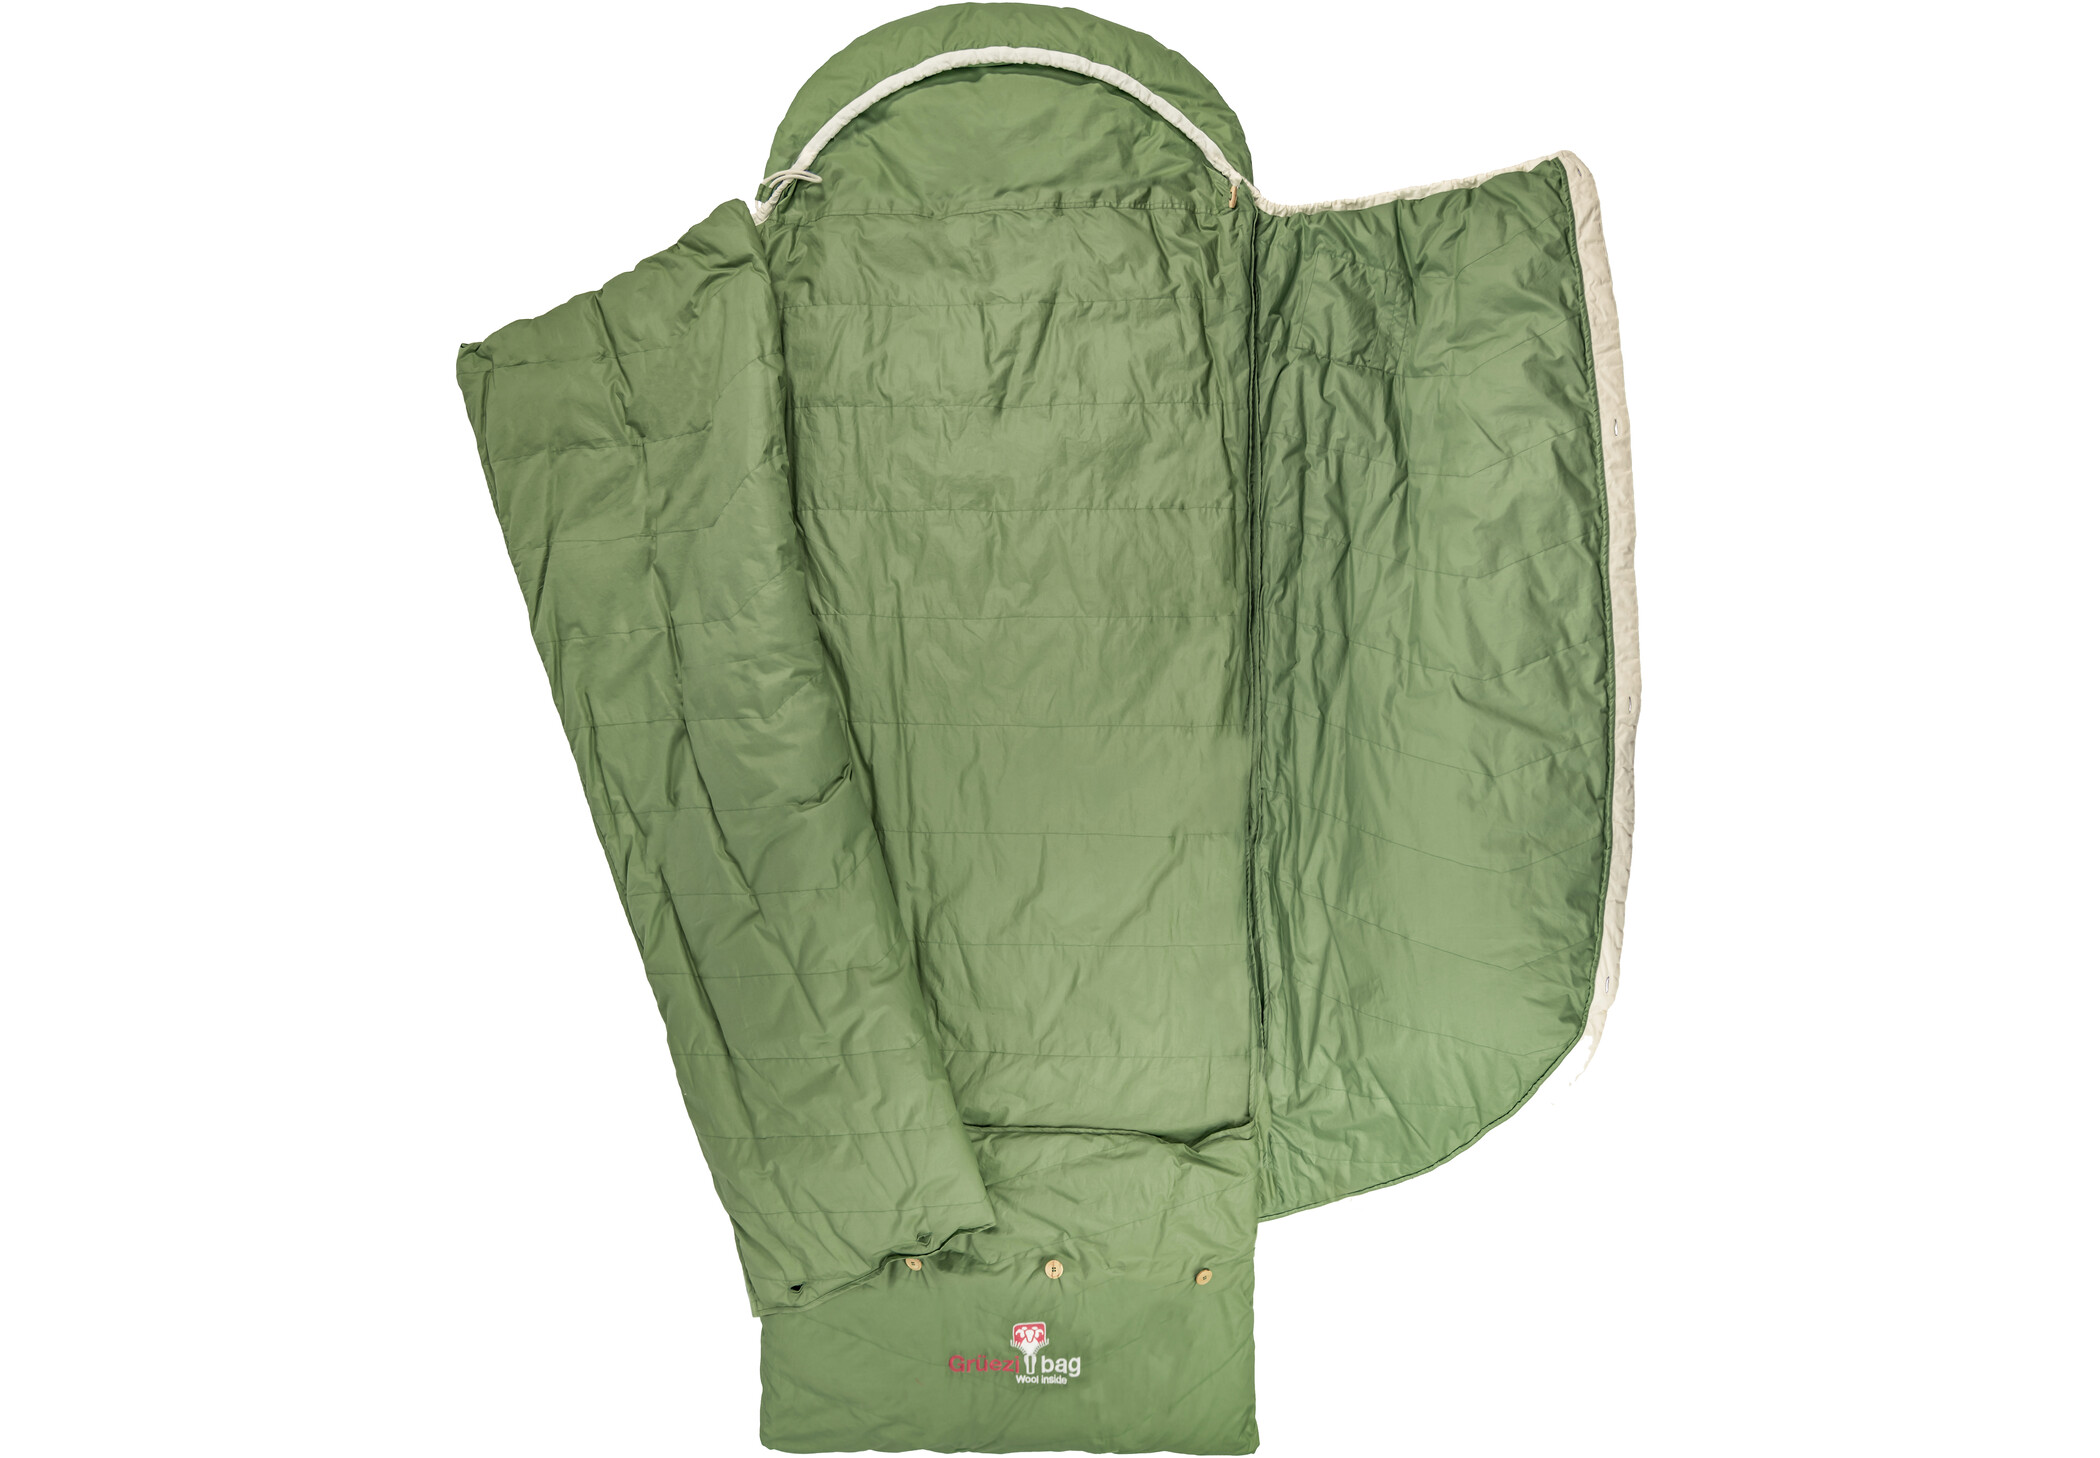 Grüezi-Bag Biopod DownWool Nature Comfort Saco de Dormir, verde